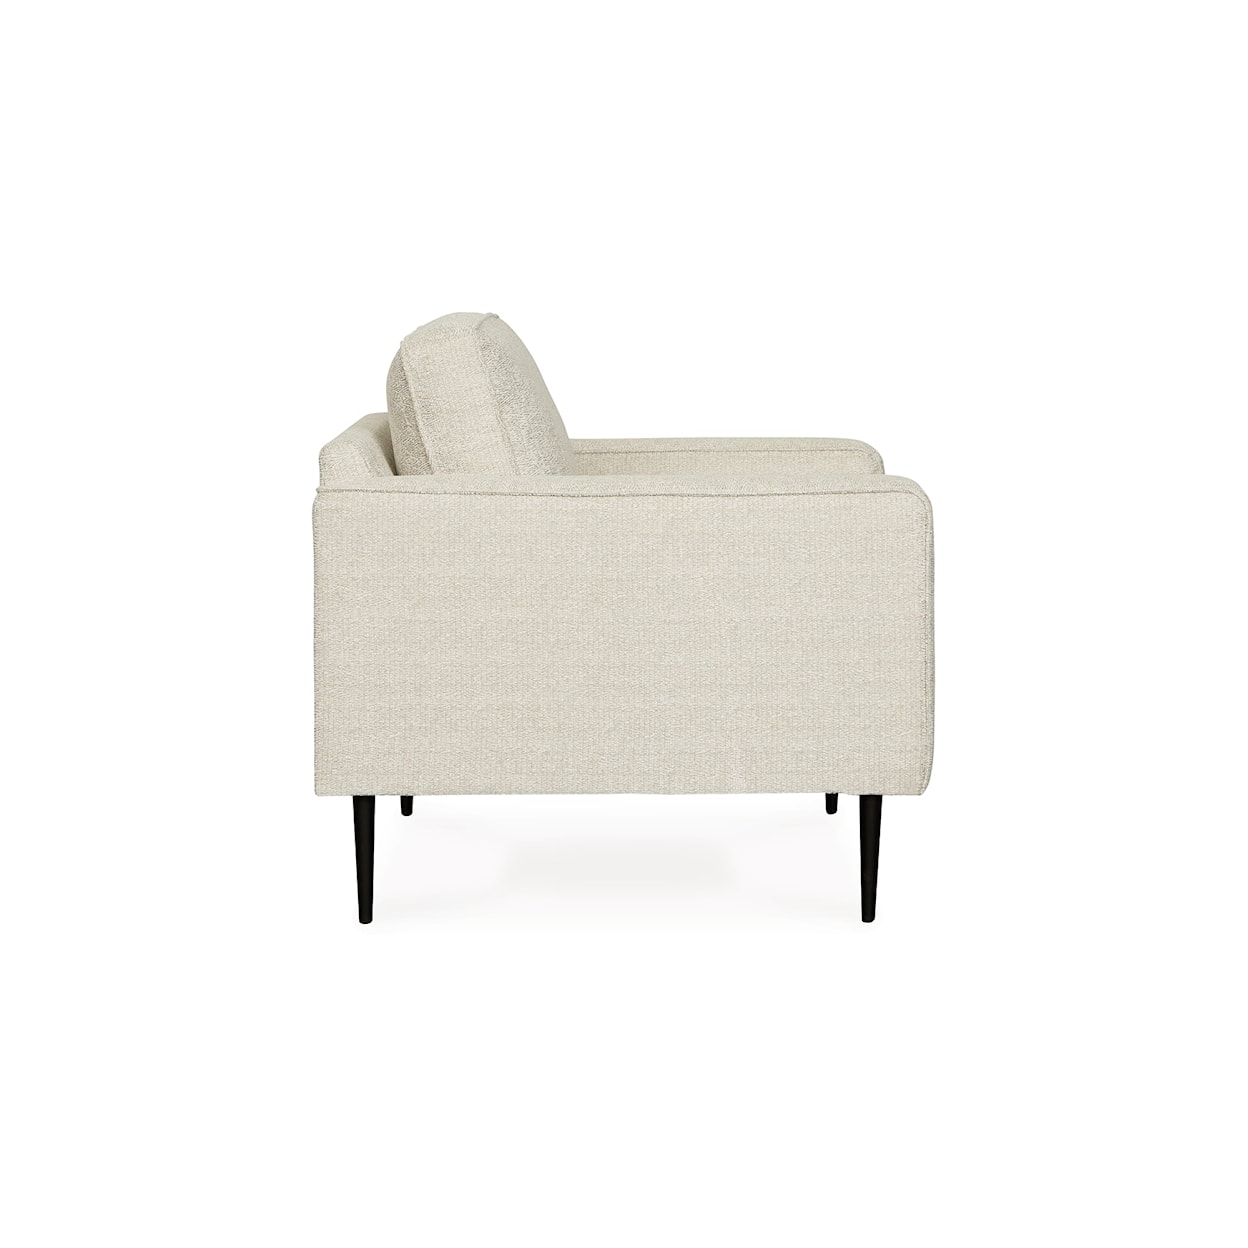 Ashley Furniture Signature Design Hazela Chair